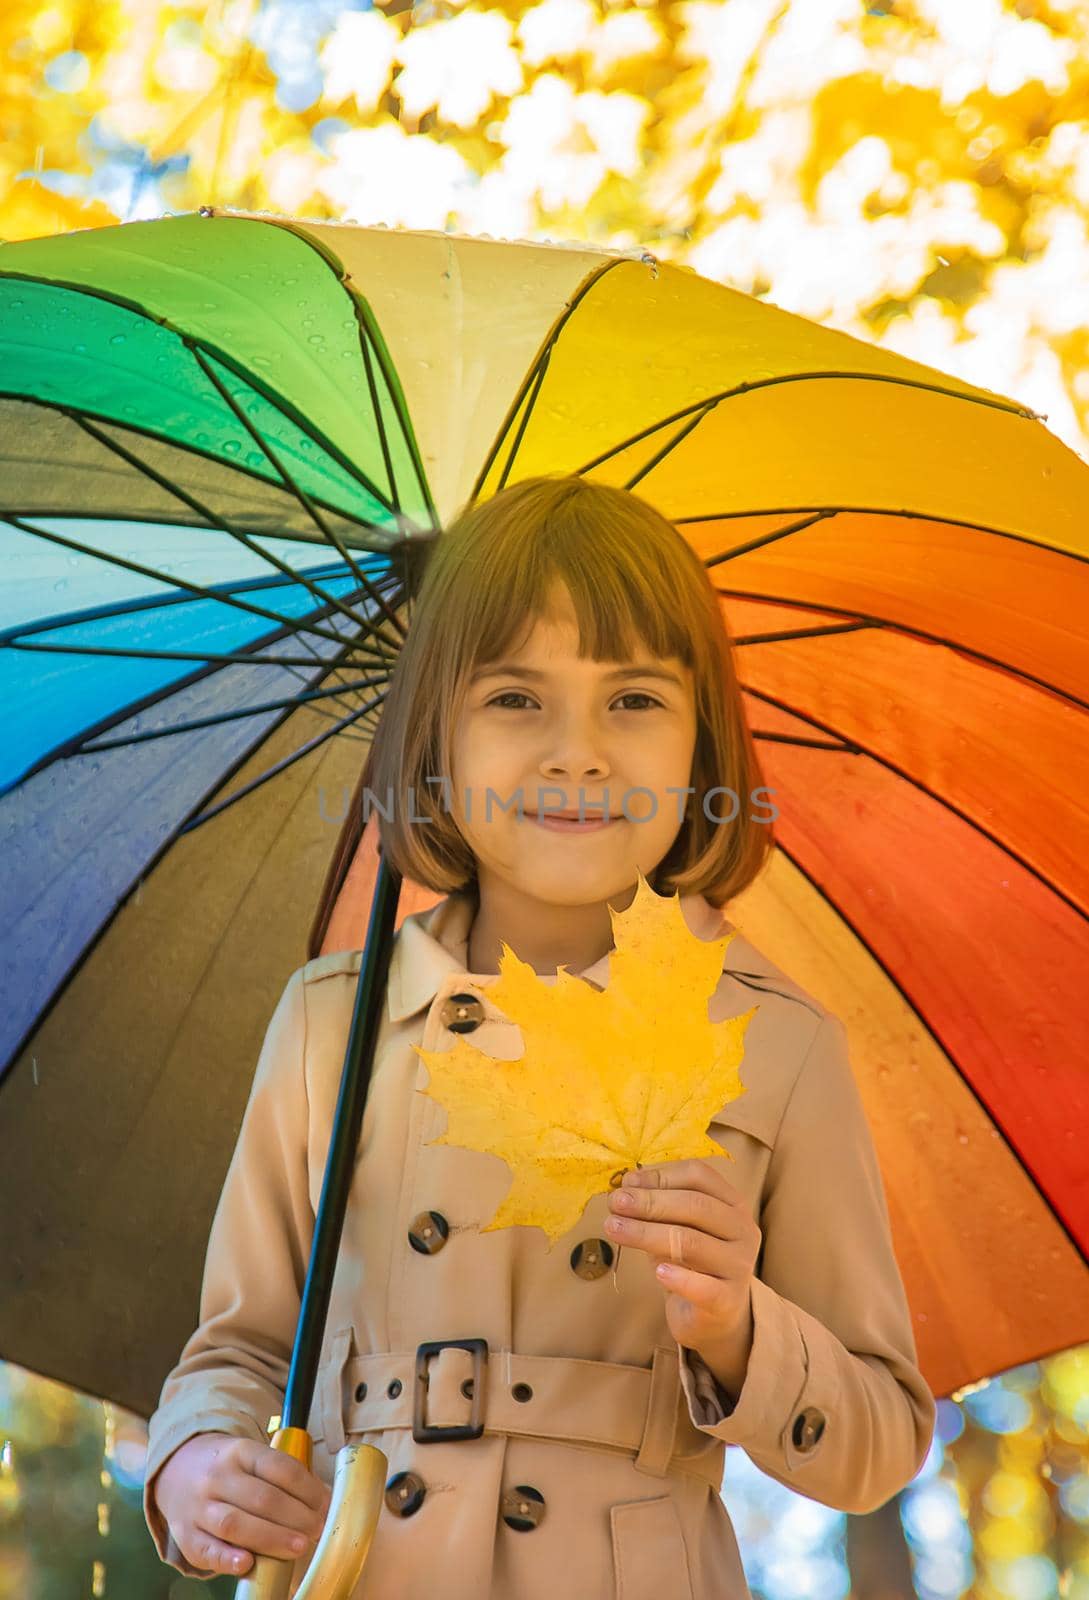 Child under an umbrella in the autumn park. Selective focus.